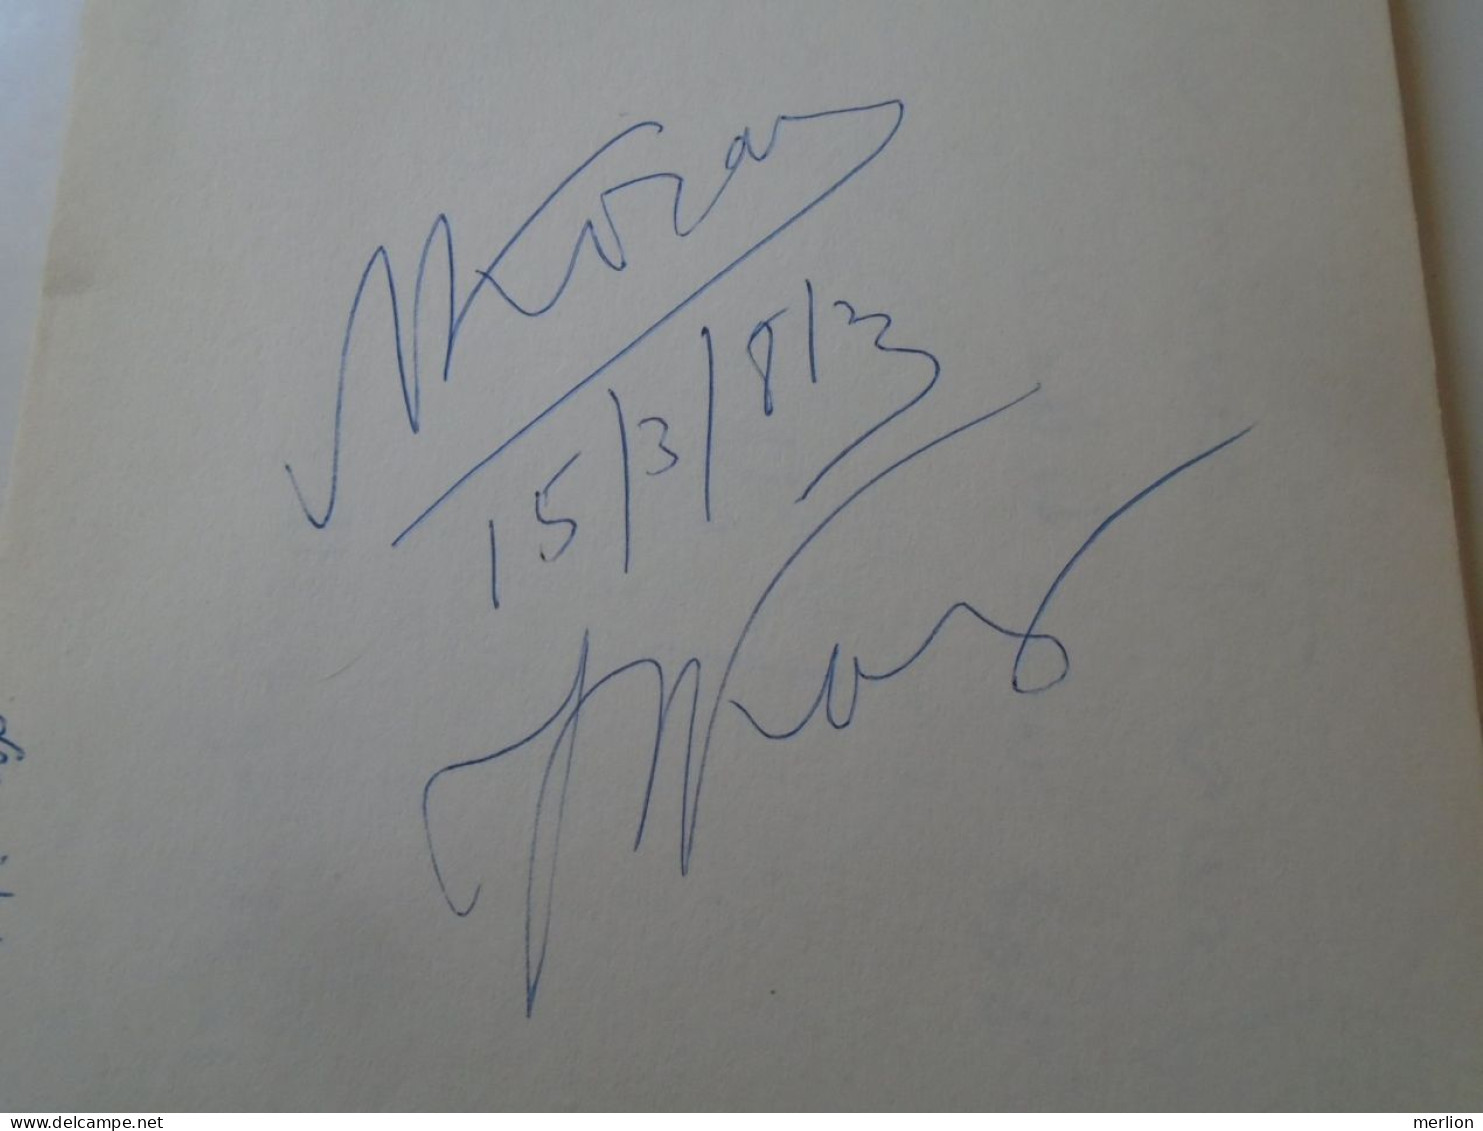 D203328  Signature -Autograph  - Leonid Borisovich Kogan And  Nina Kogan 1981   And Pitti Katalin Autograph On Backside - Zangers & Muzikanten